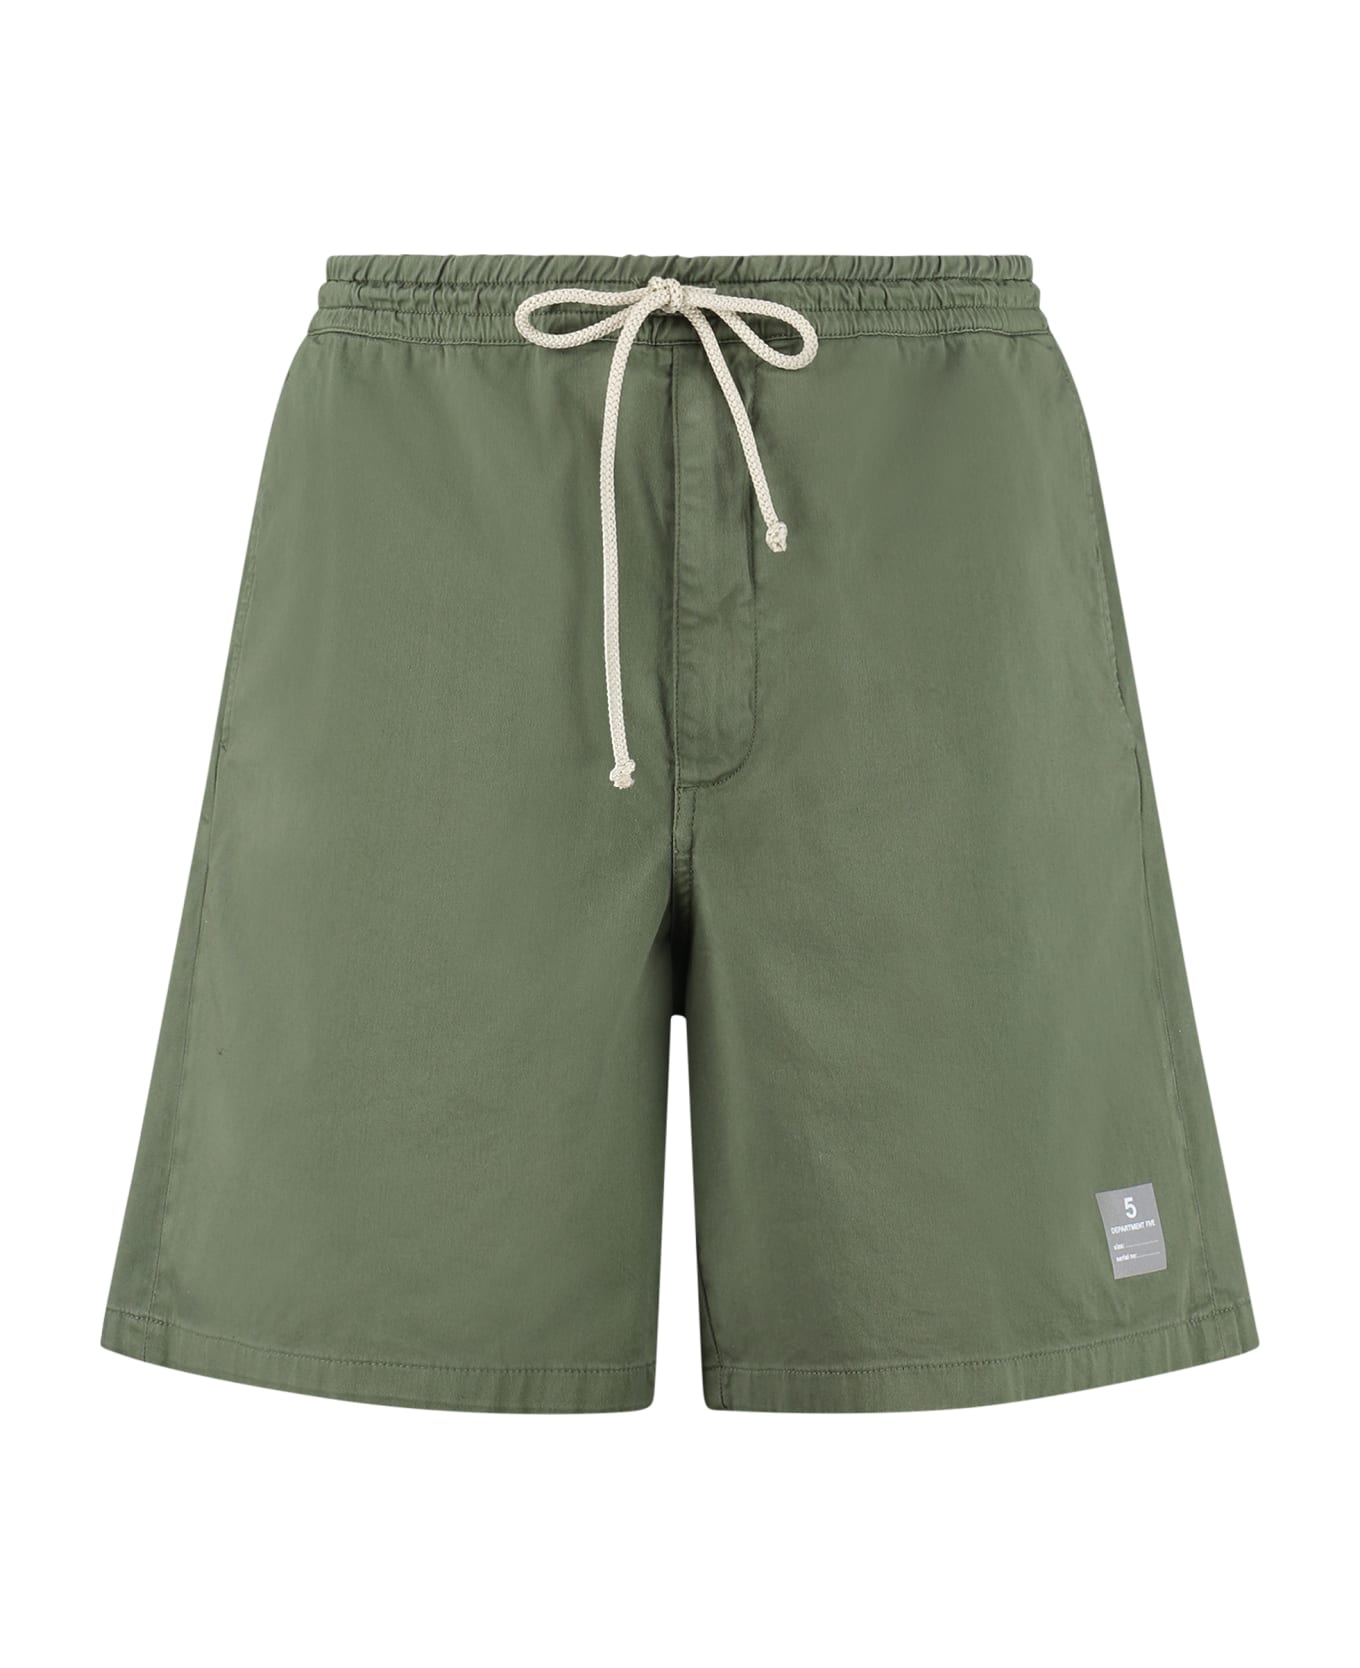 Department Five Collins Cotton Bermuda Shorts - green